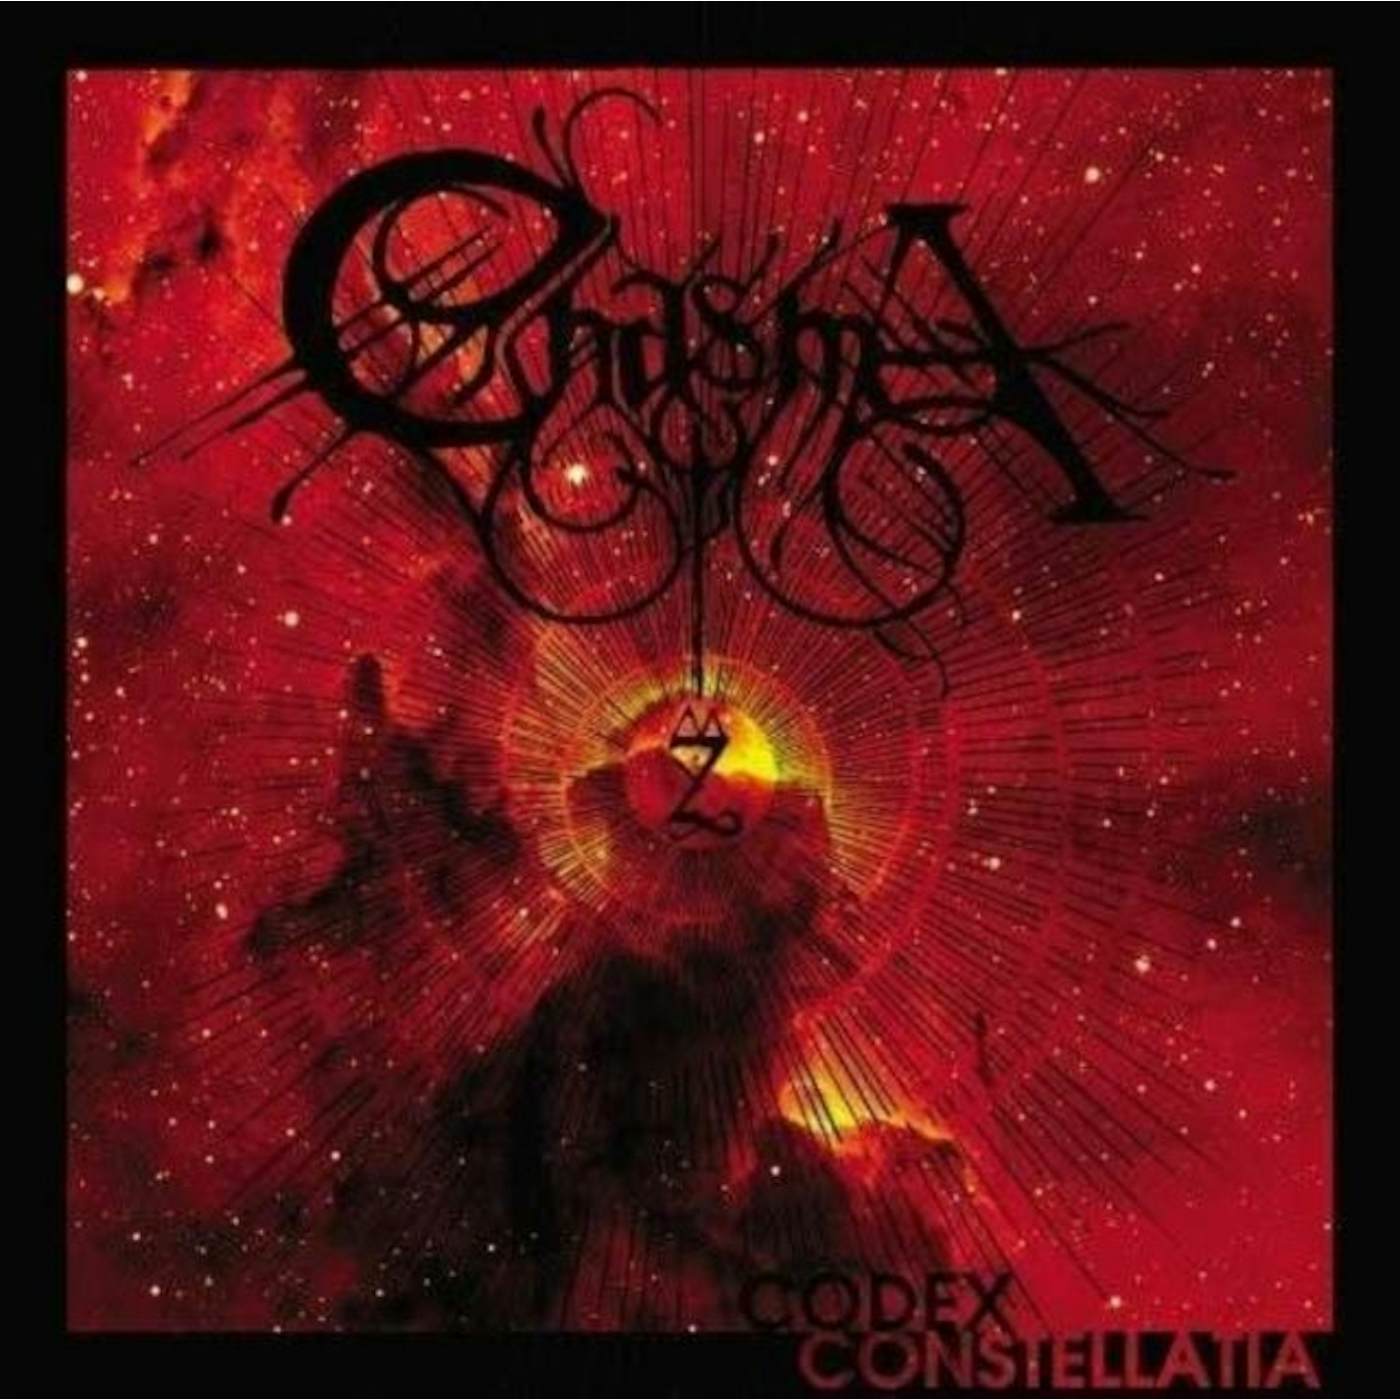 Chasma CD - Godex Constellatia